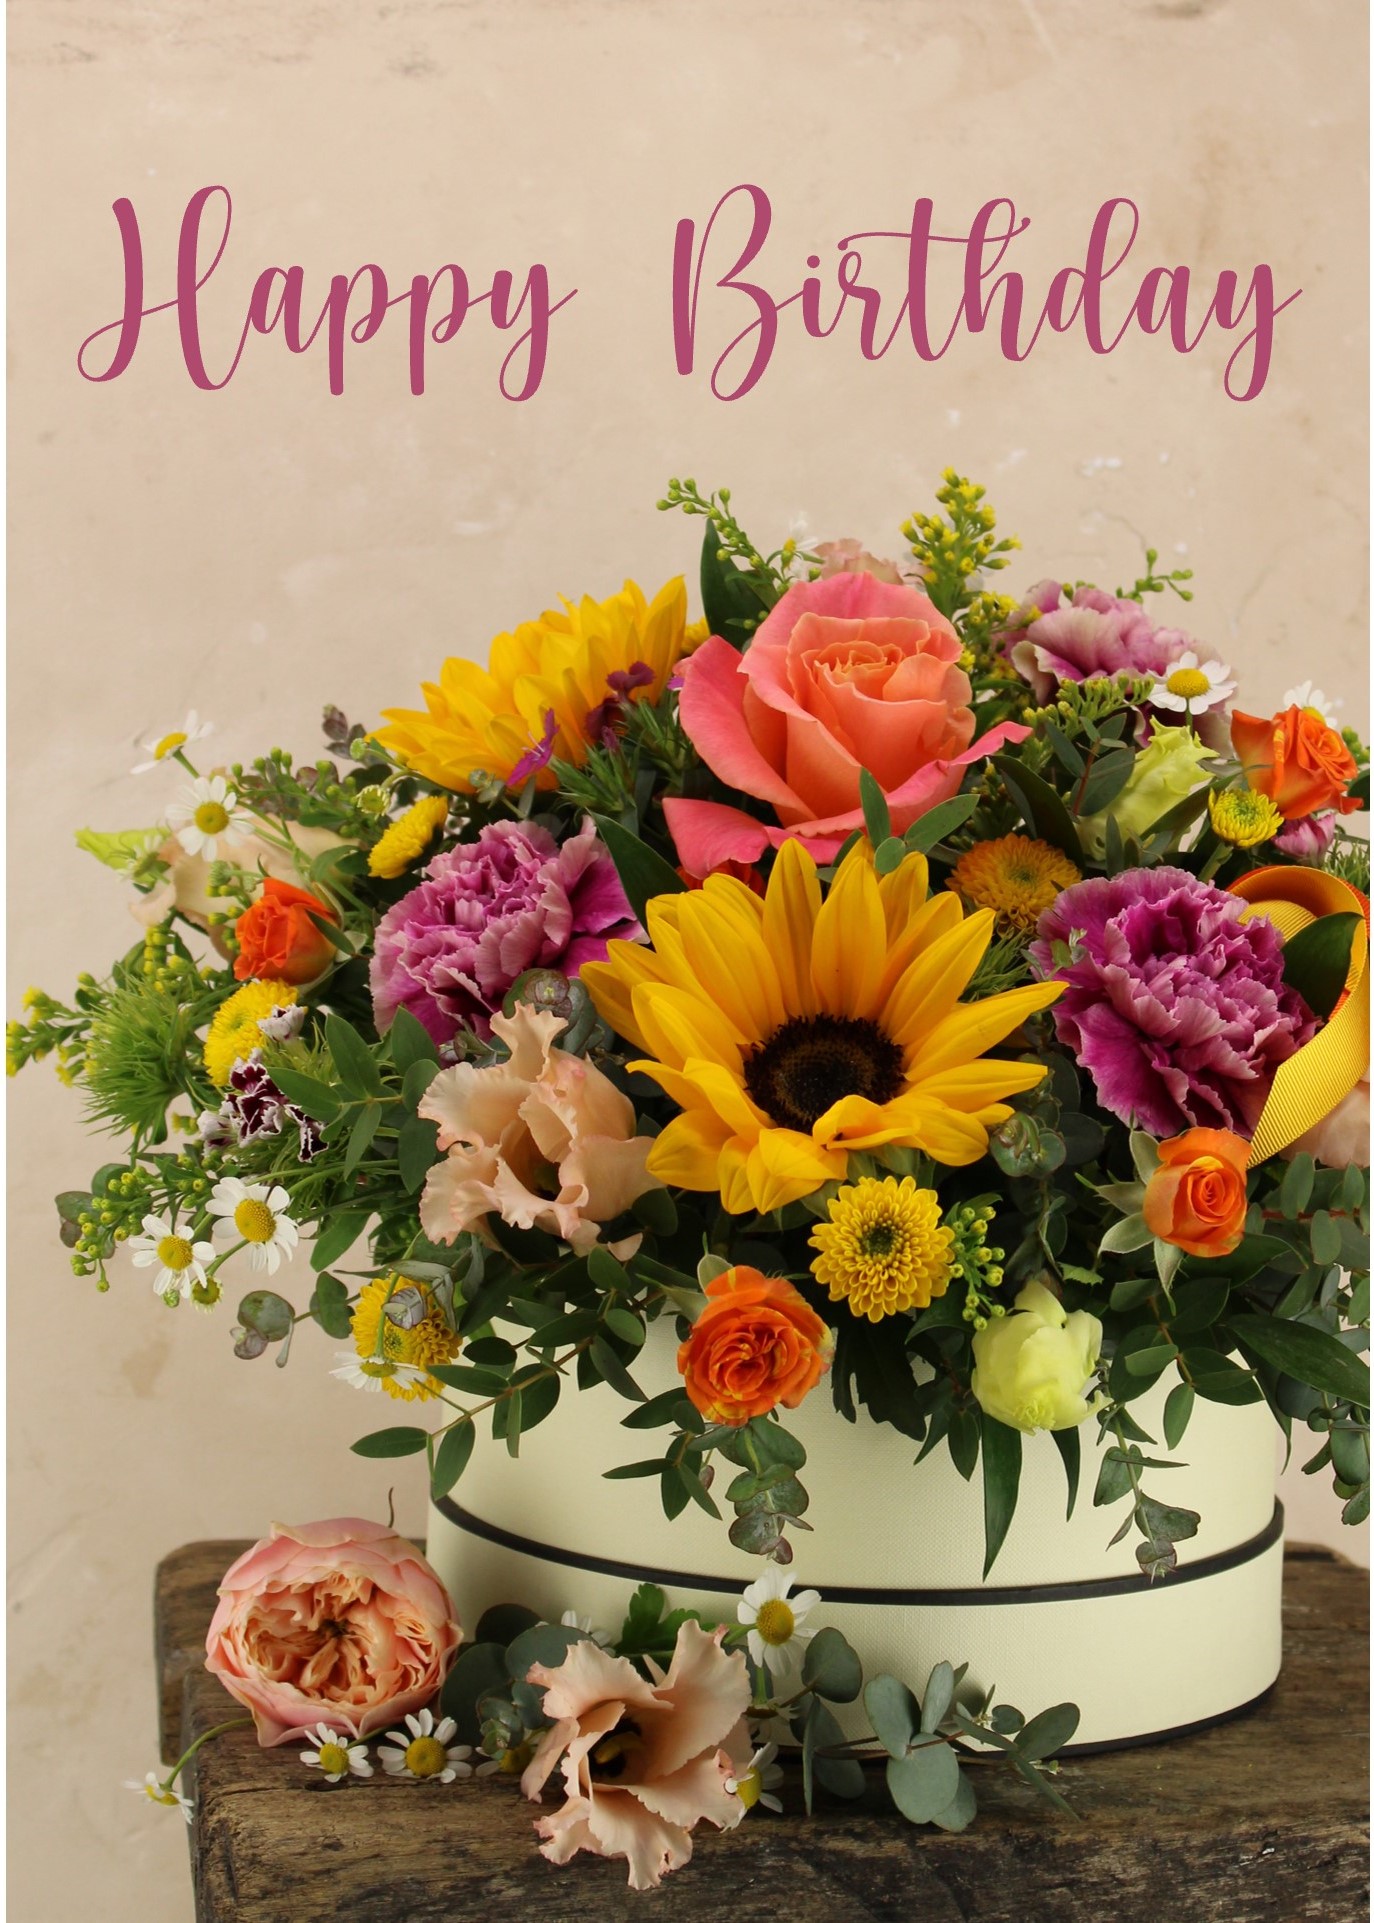 Edible Arrangements® fruit baskets - Birthday Cake, Balloons, & Flowers  Gift Bundle